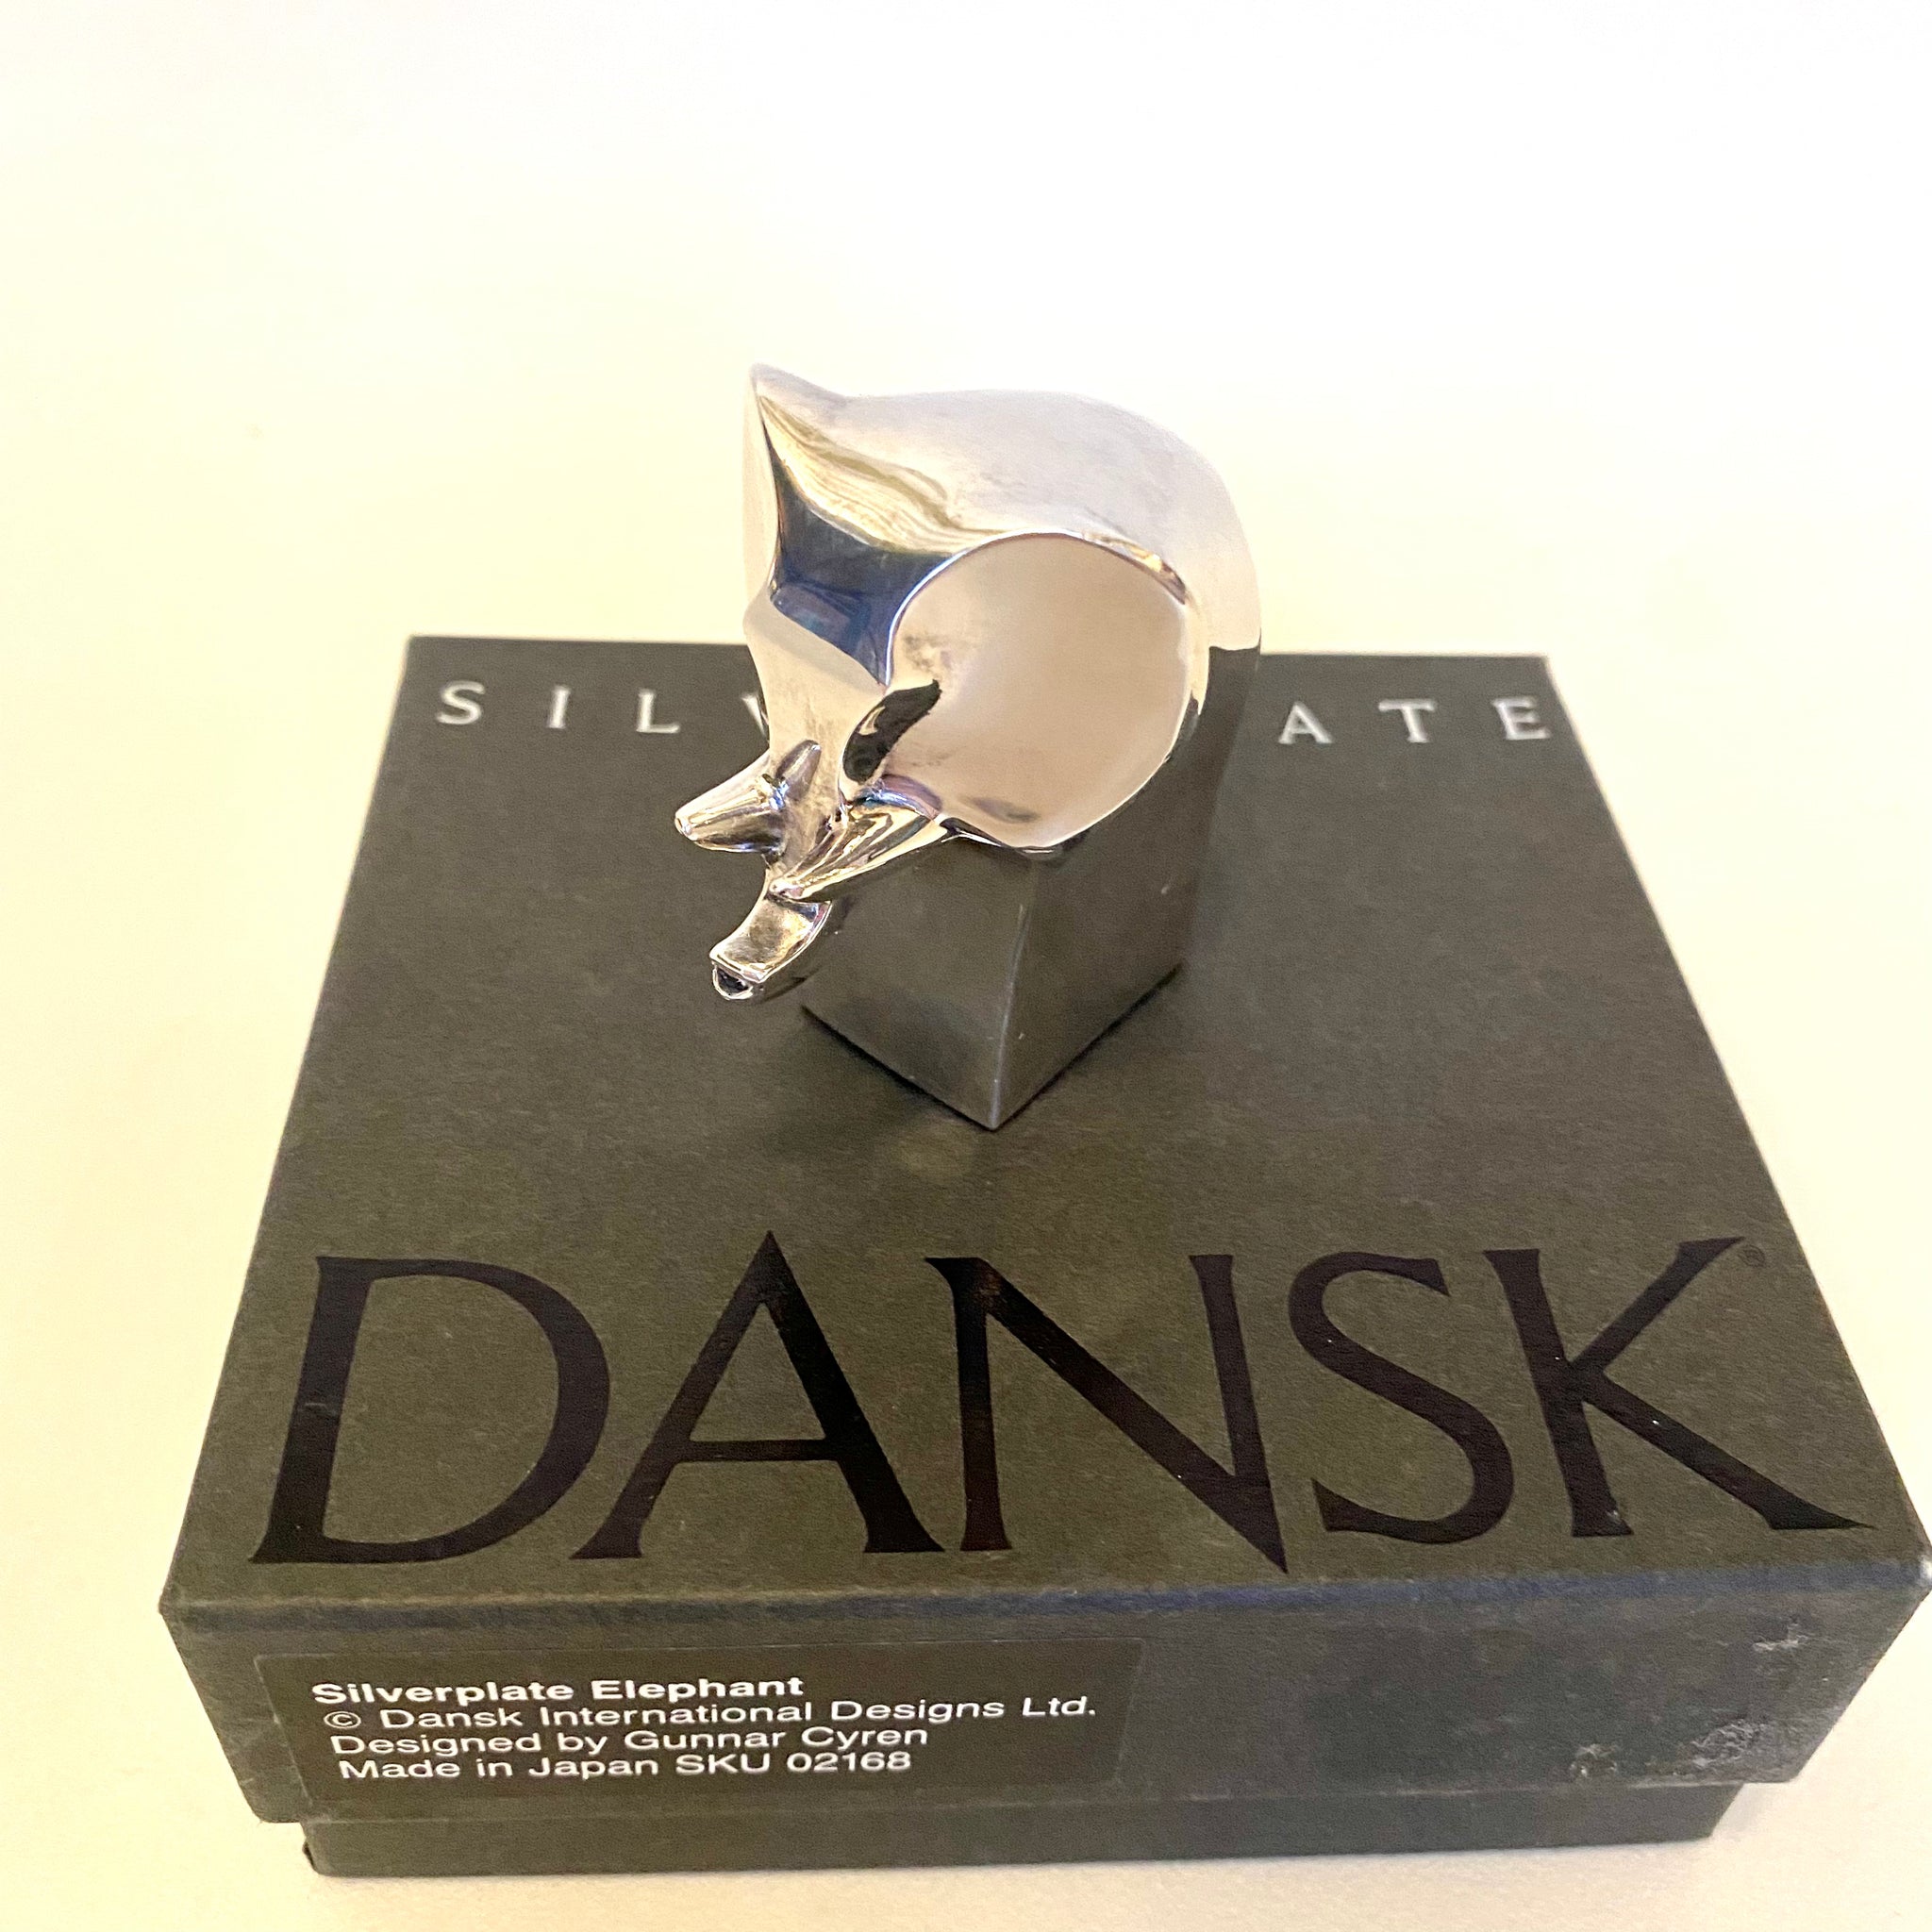 Vintage Dansk Elephant Paperweight